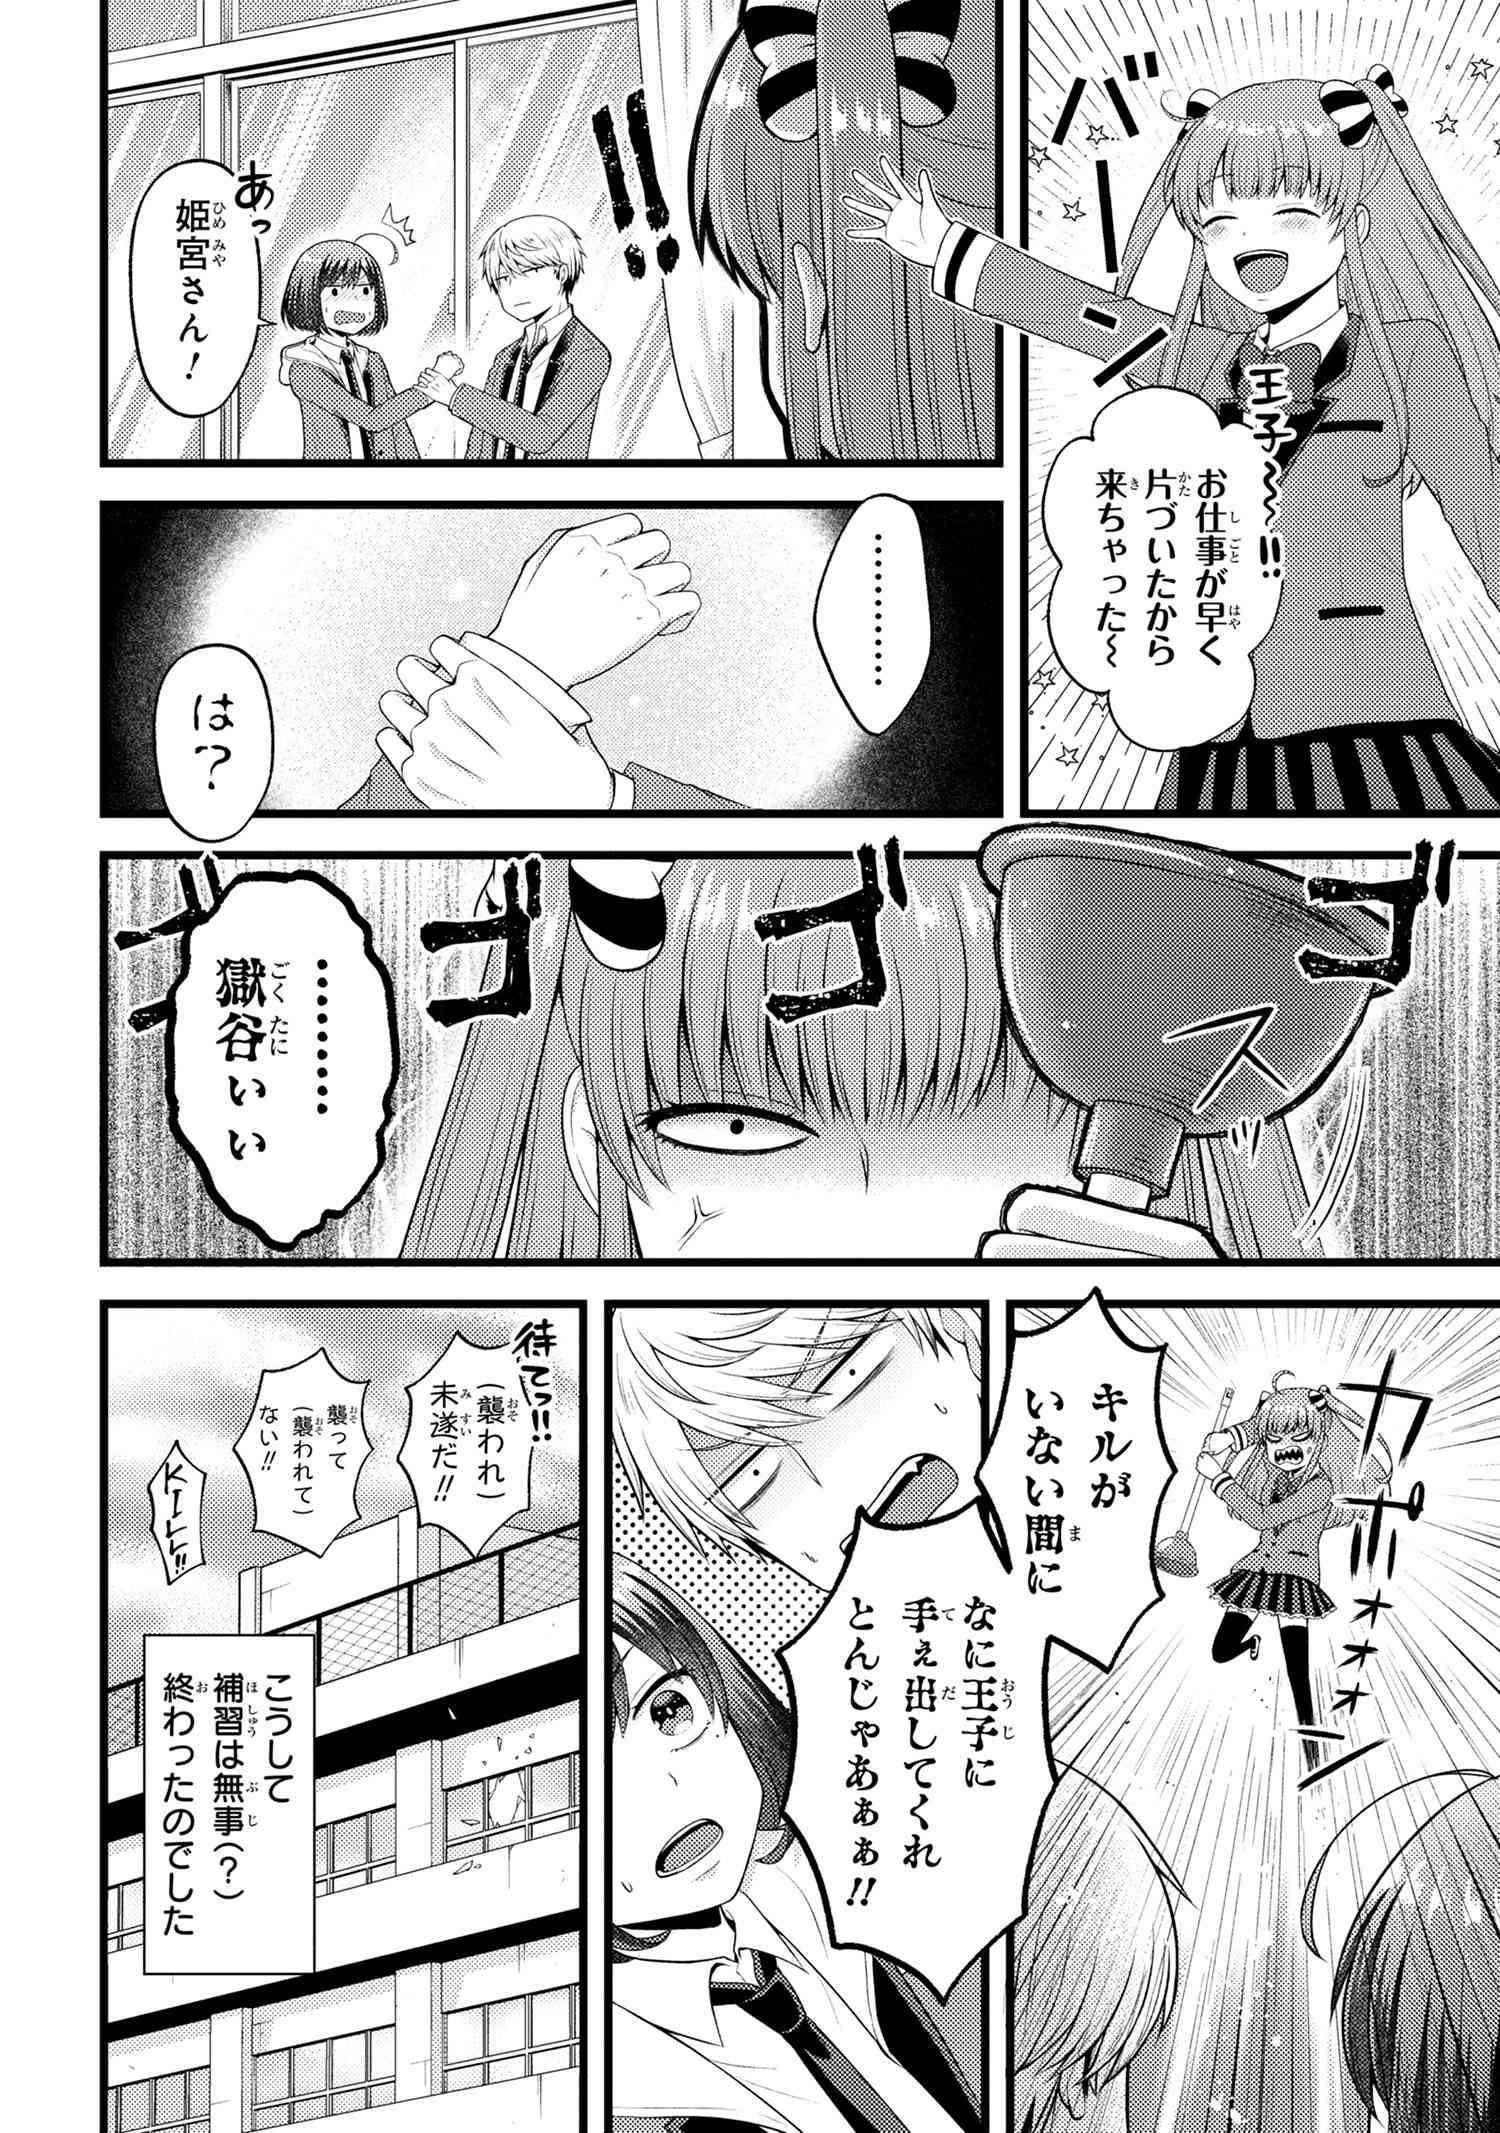 Tomodachi Inai Nekota-san to Sweets Tabetai Gokutani-kun - Chapter 7-4 - Page 2